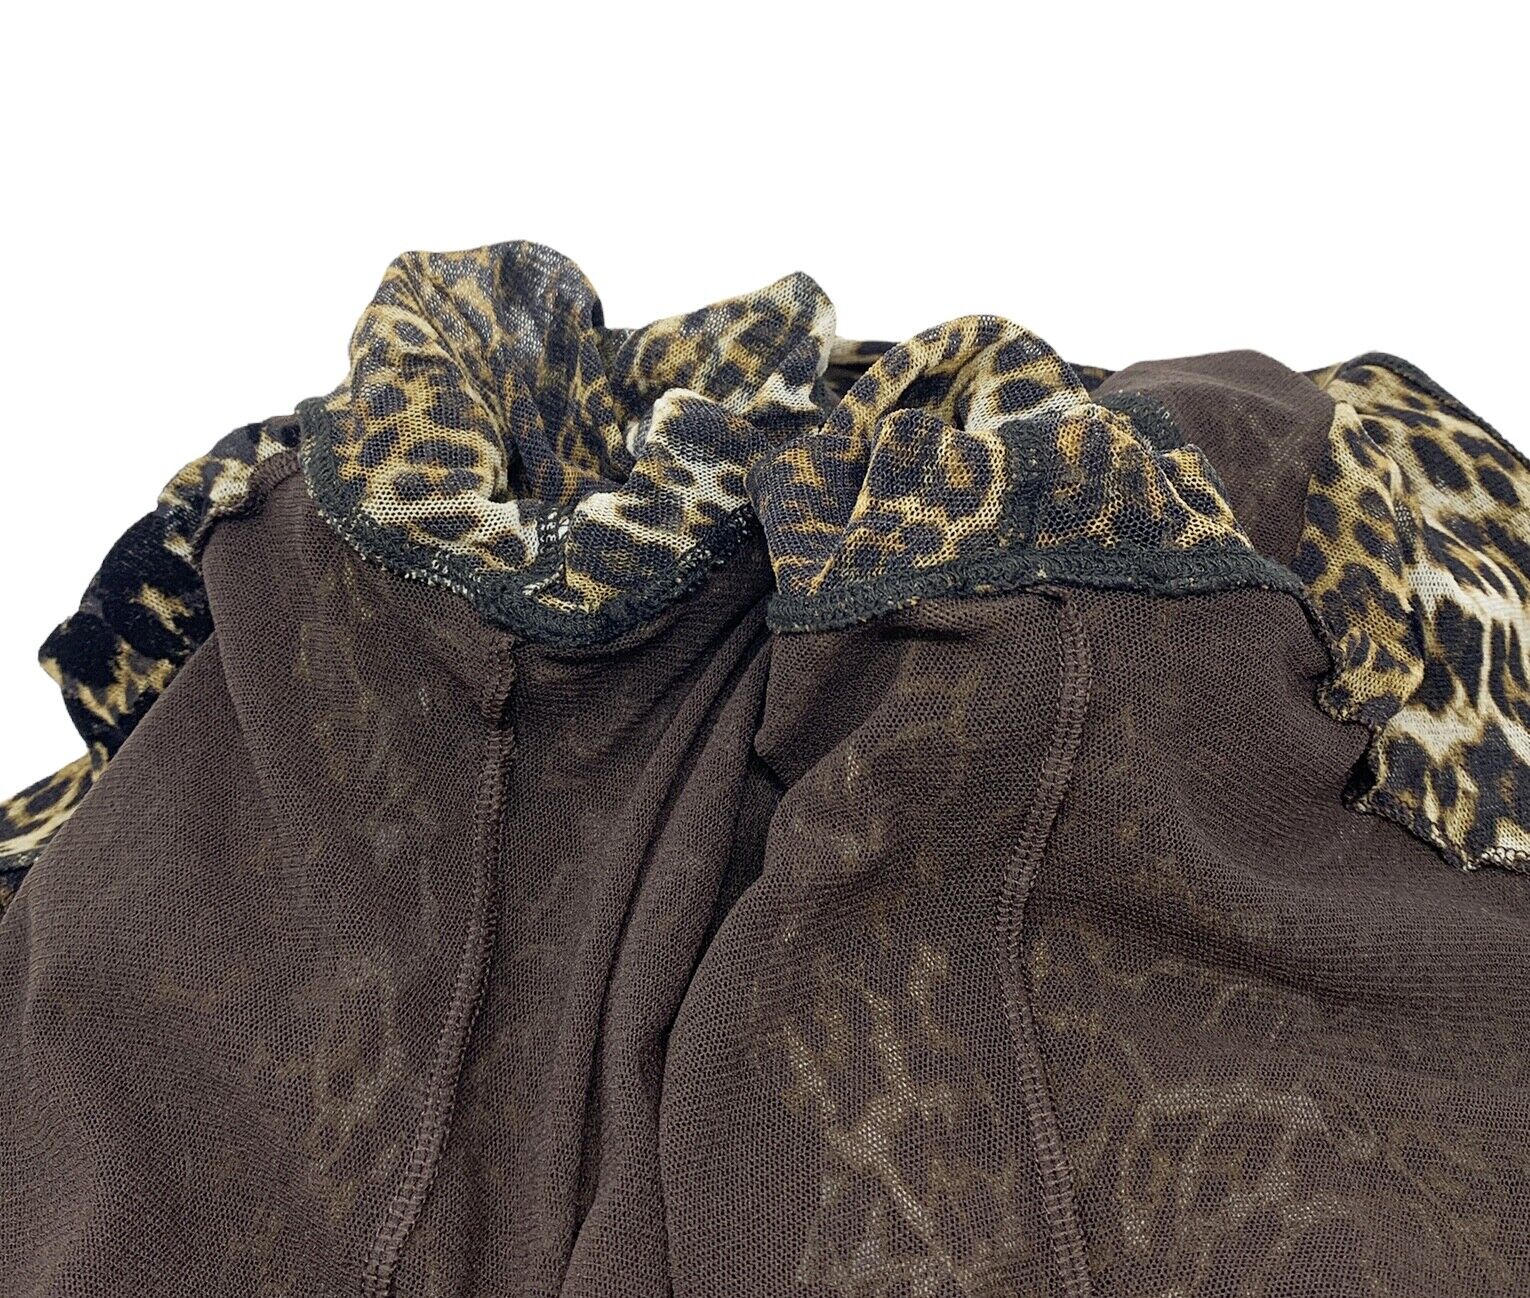 Jean Paul GAULTIER Vintage 1999 Powernet Leopard Shirts #S Top Scarf Beige RankA